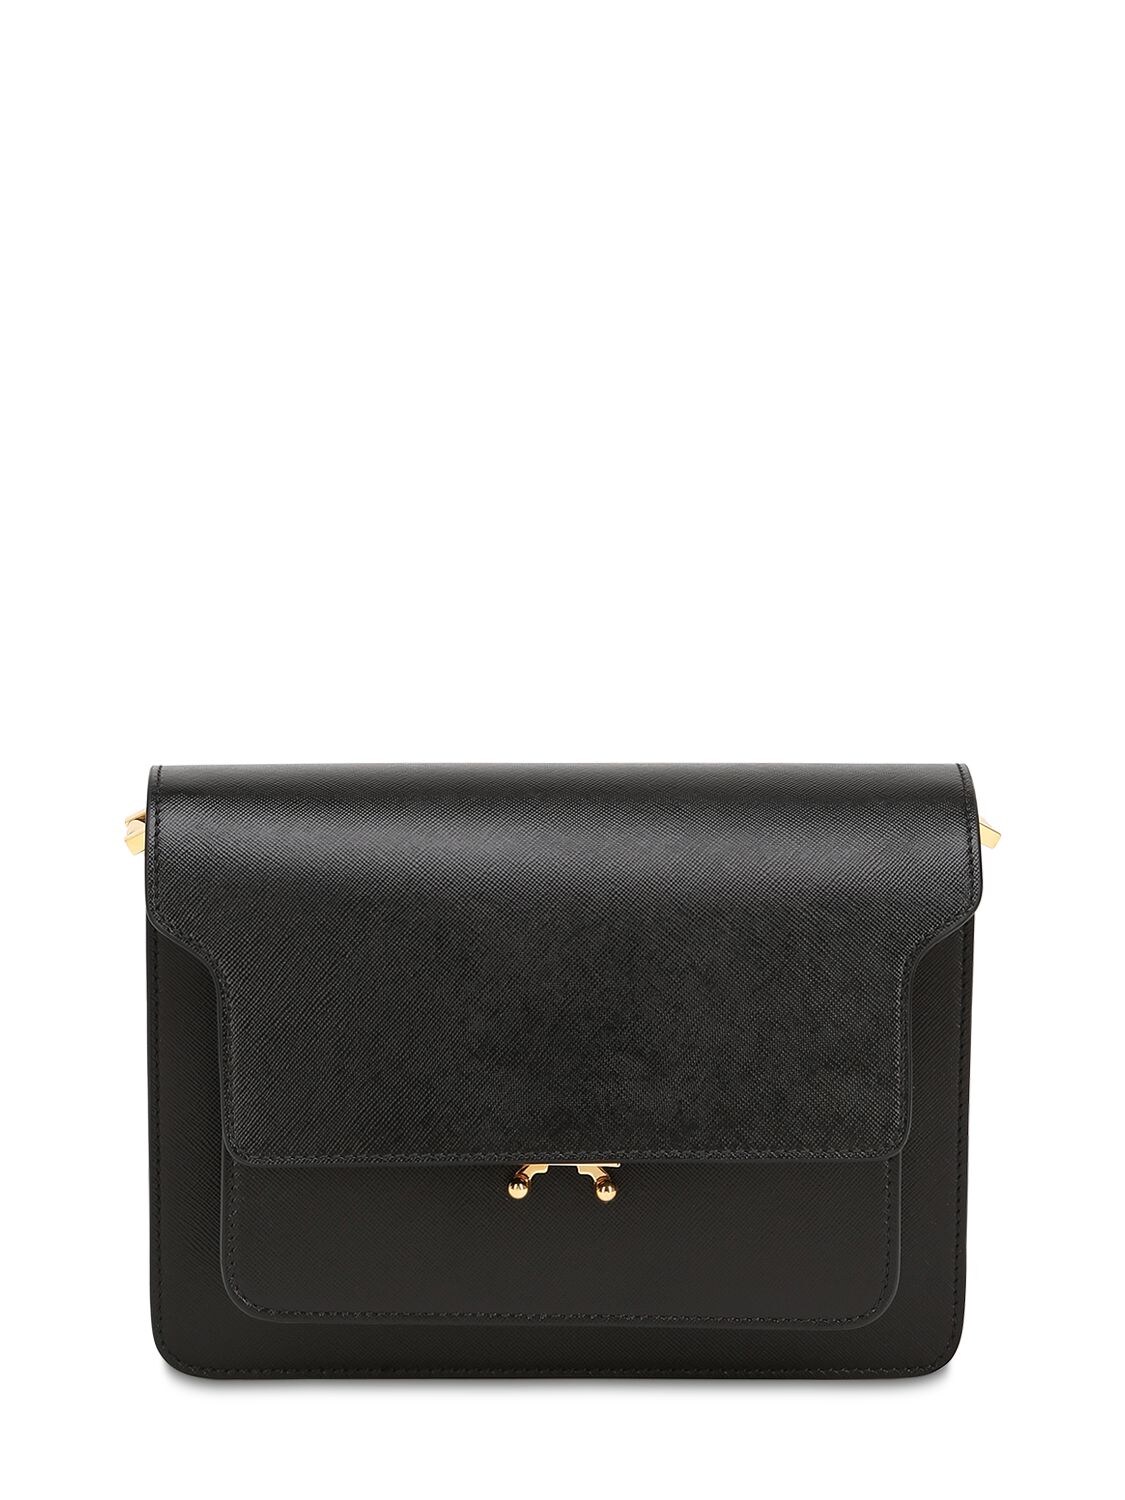 Marni Medium Saffiano Leather Trunk Bag In Black